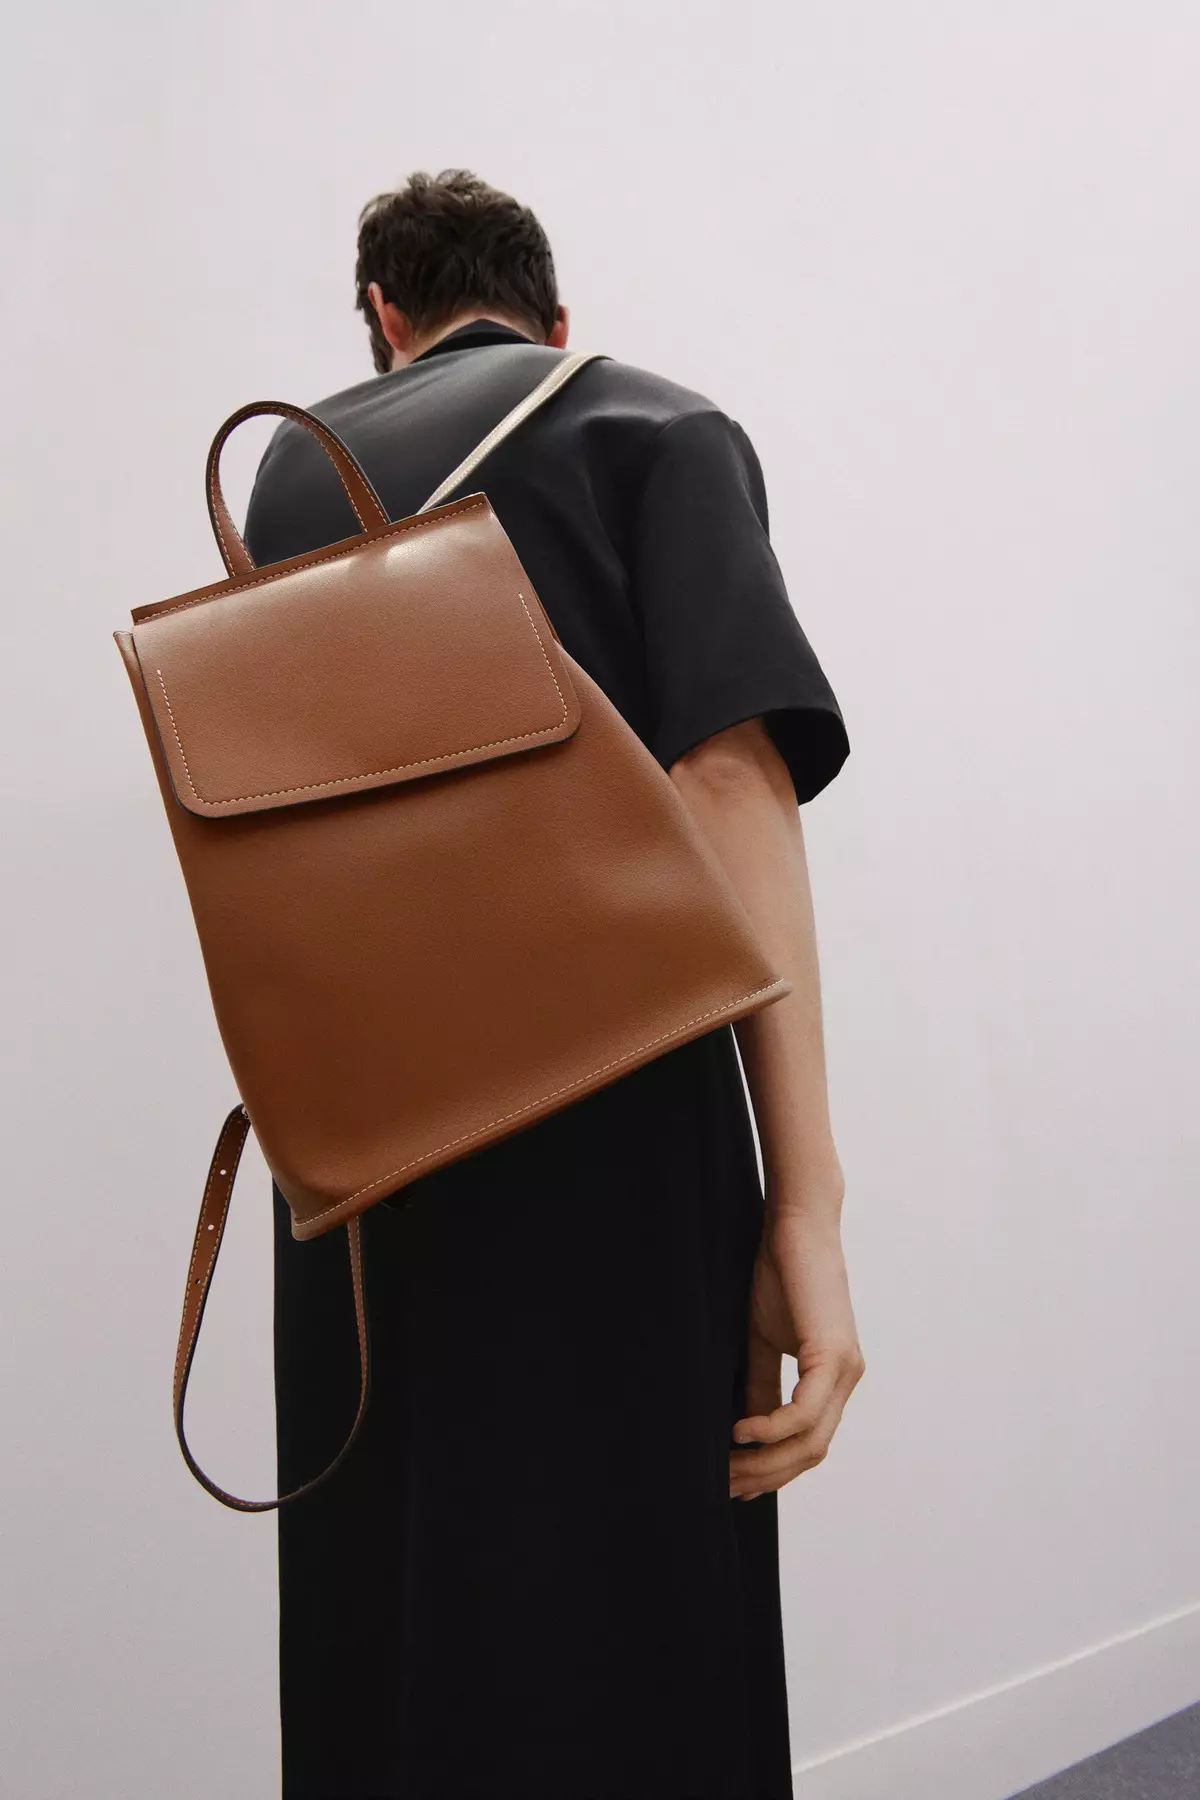 ZARA Backpacks: سیاہ خاتون، بچوں کے لئے بچوں، سرمئی اور سرخ، ساتھ ساتھ کمپنی سے بیگ بیگ بیگ کے دیگر ماڈل. پہننے کے لئے کیا سب سے بہتر ہے؟ 15437_2